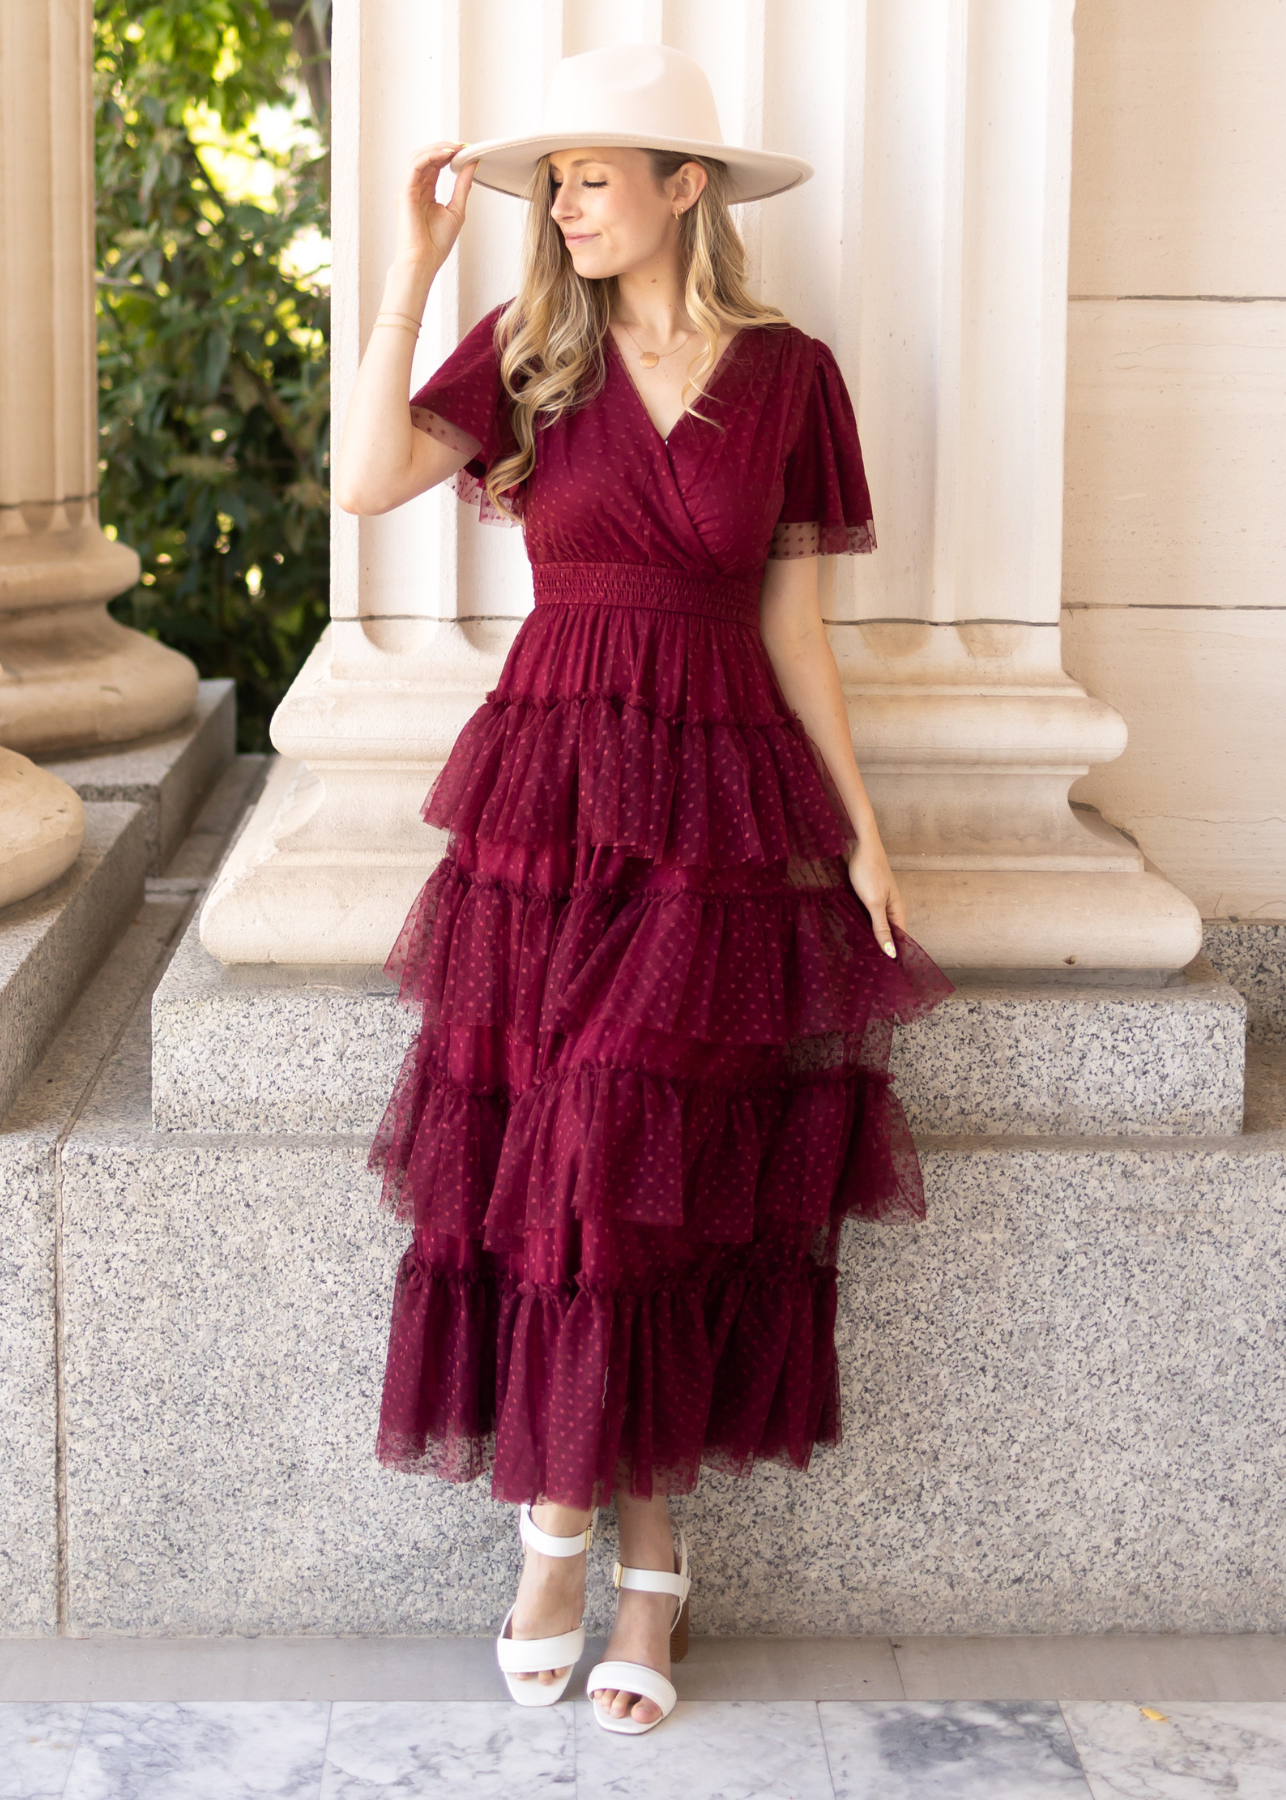 Short sleeve burgundy dress with v-neck